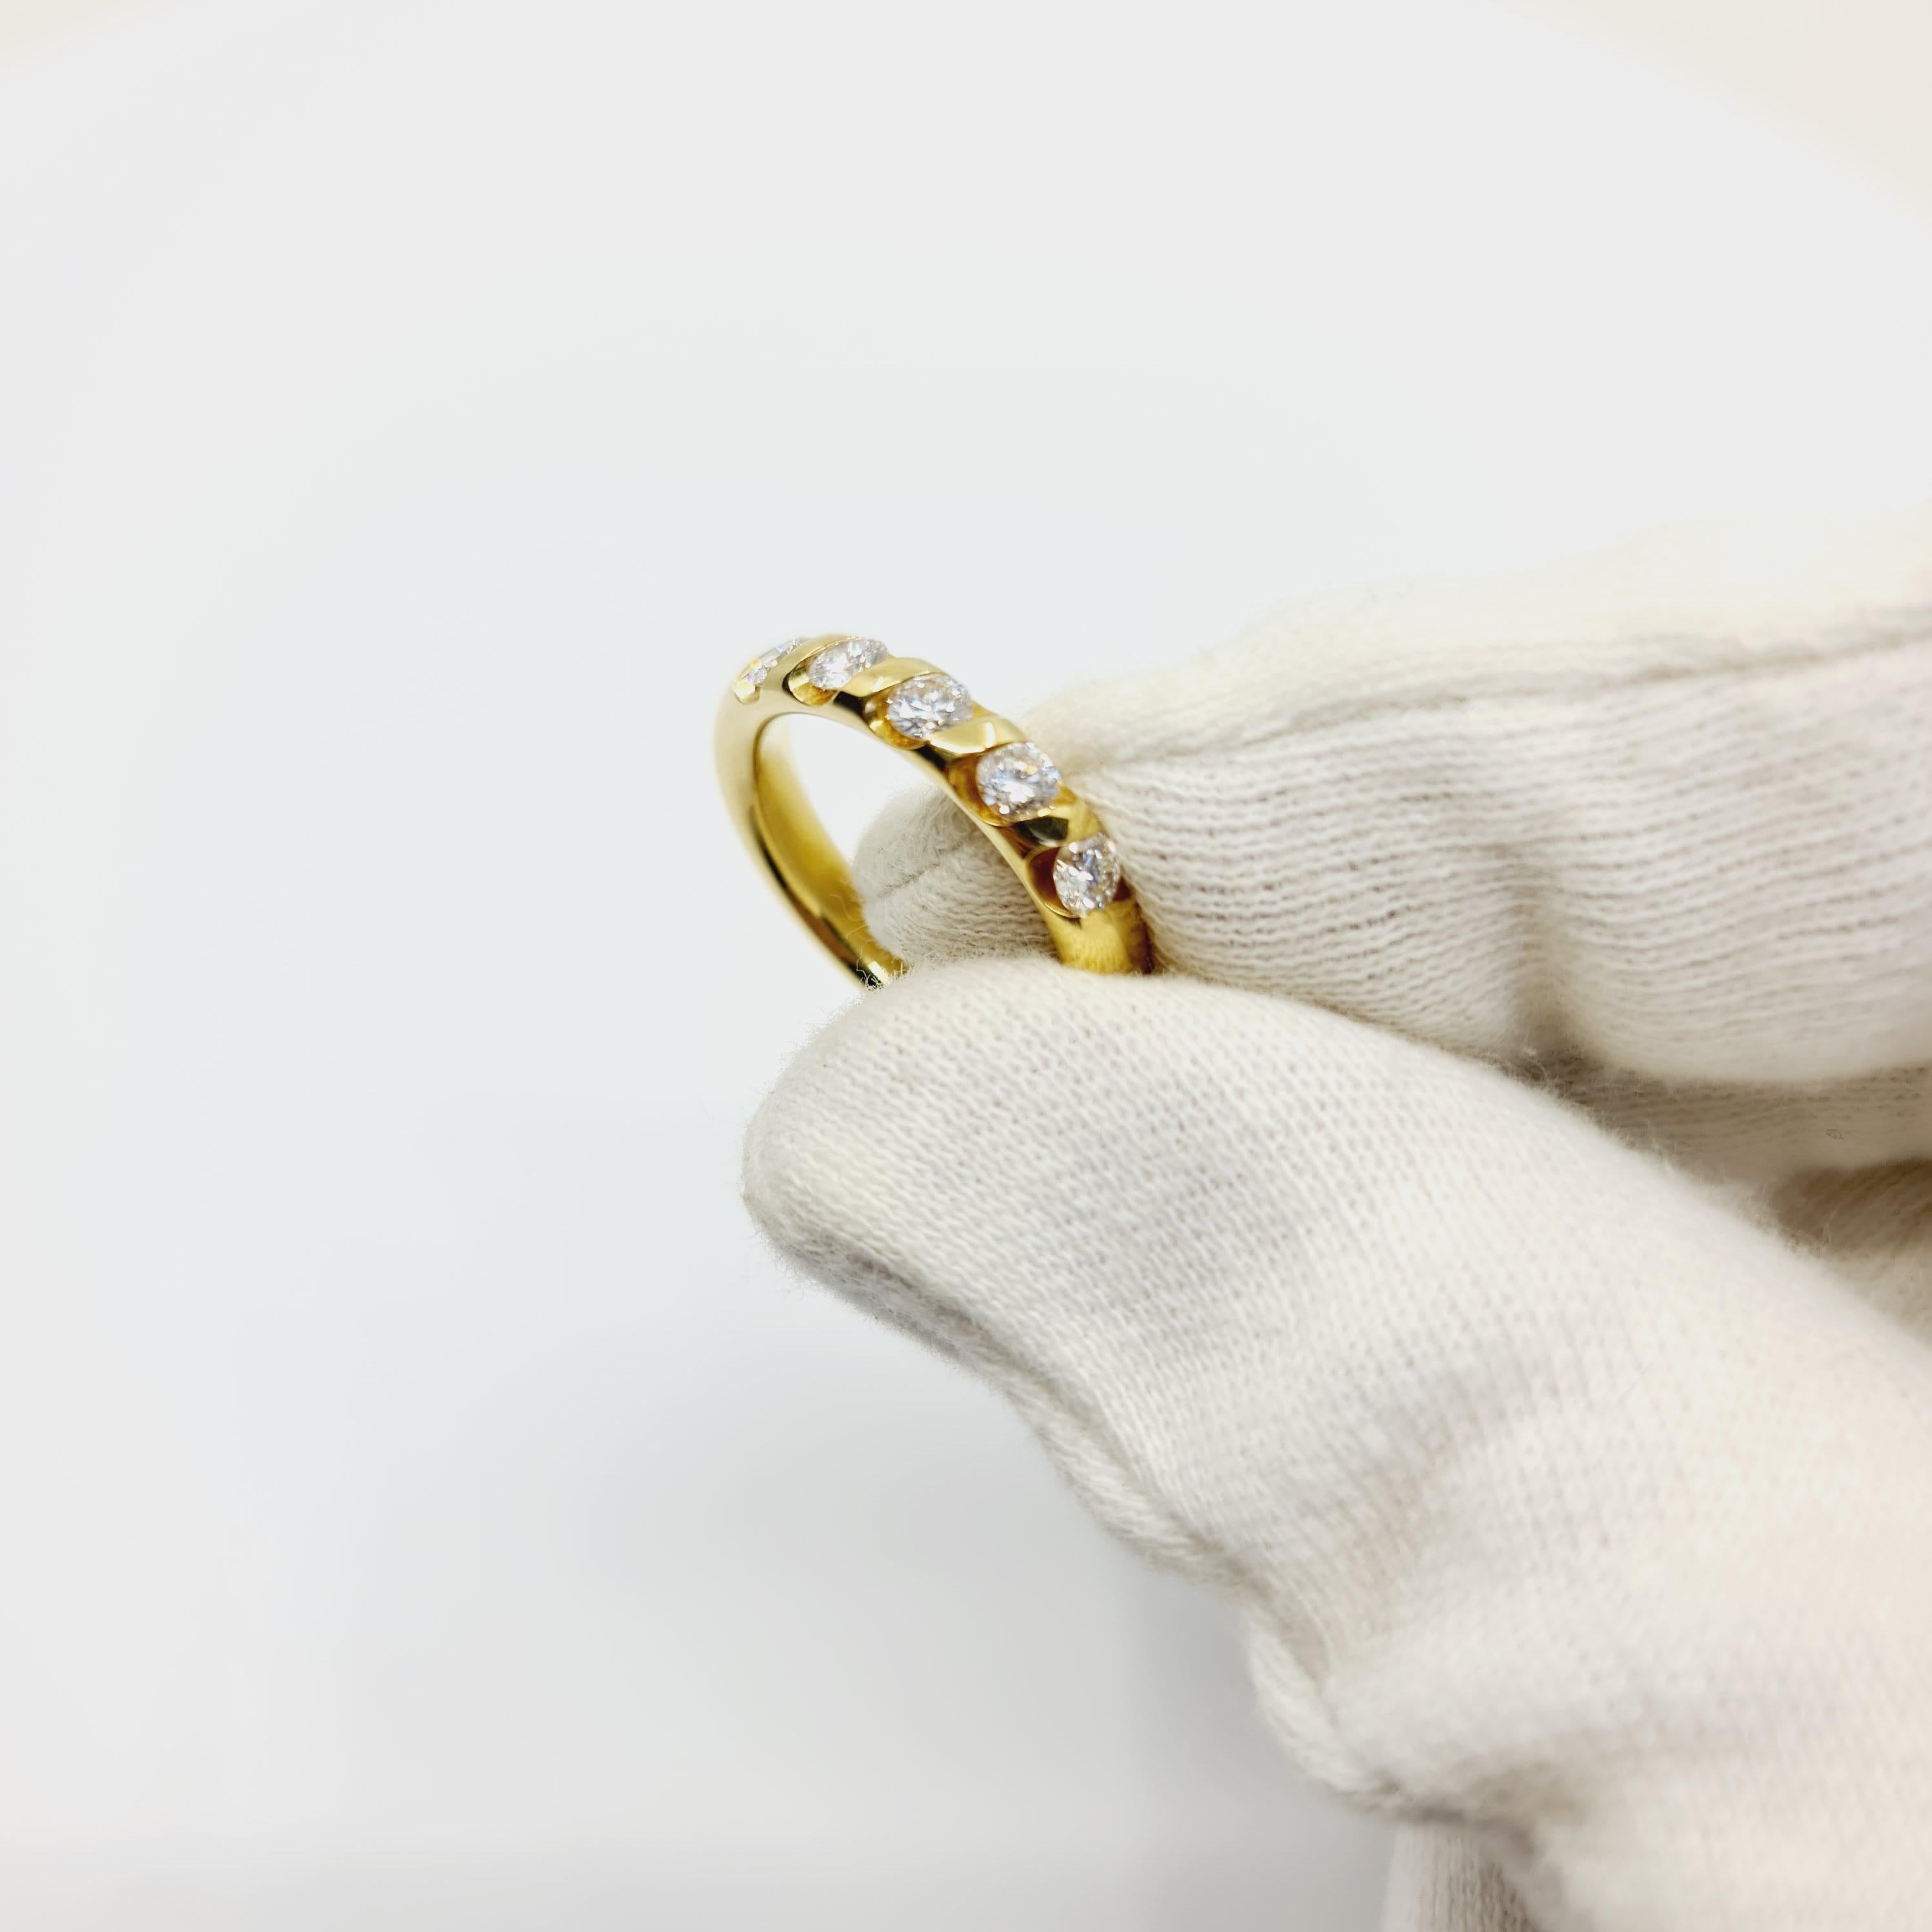 0.75 Carat Diamond Ring G/I1 18k Gold, Brilliant Cut Diamonds For Sale 3